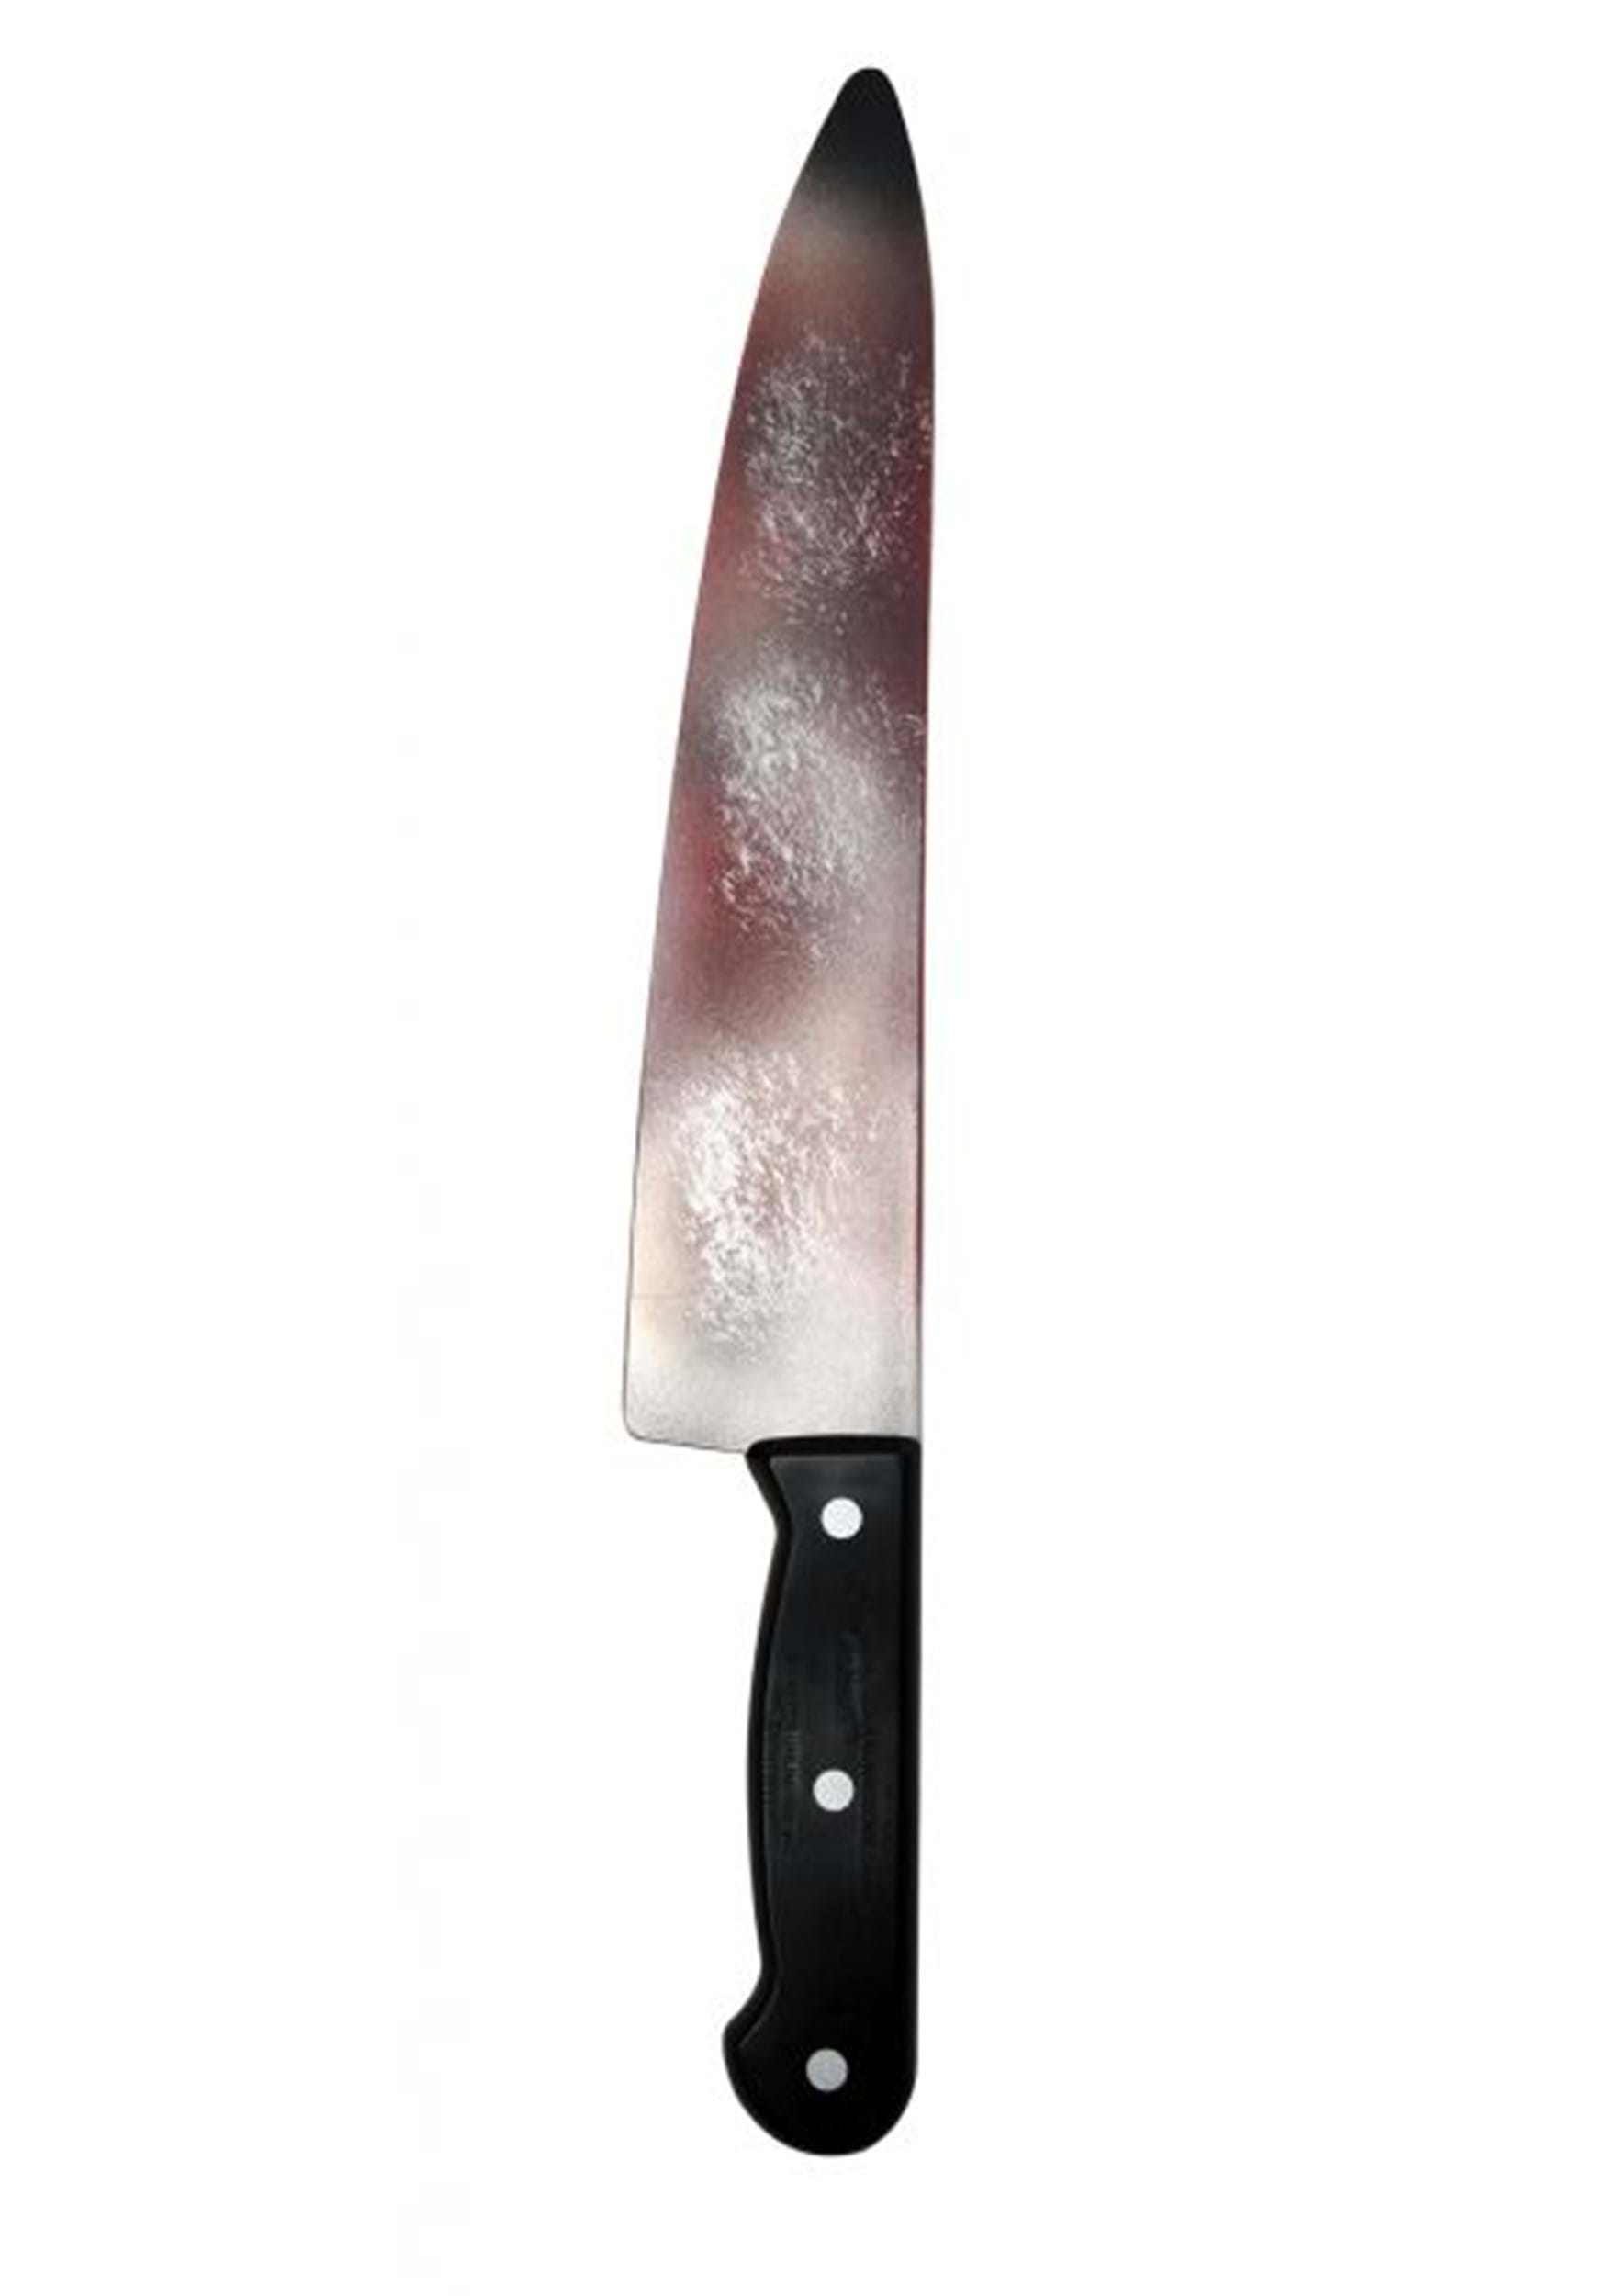 butcher knife logo